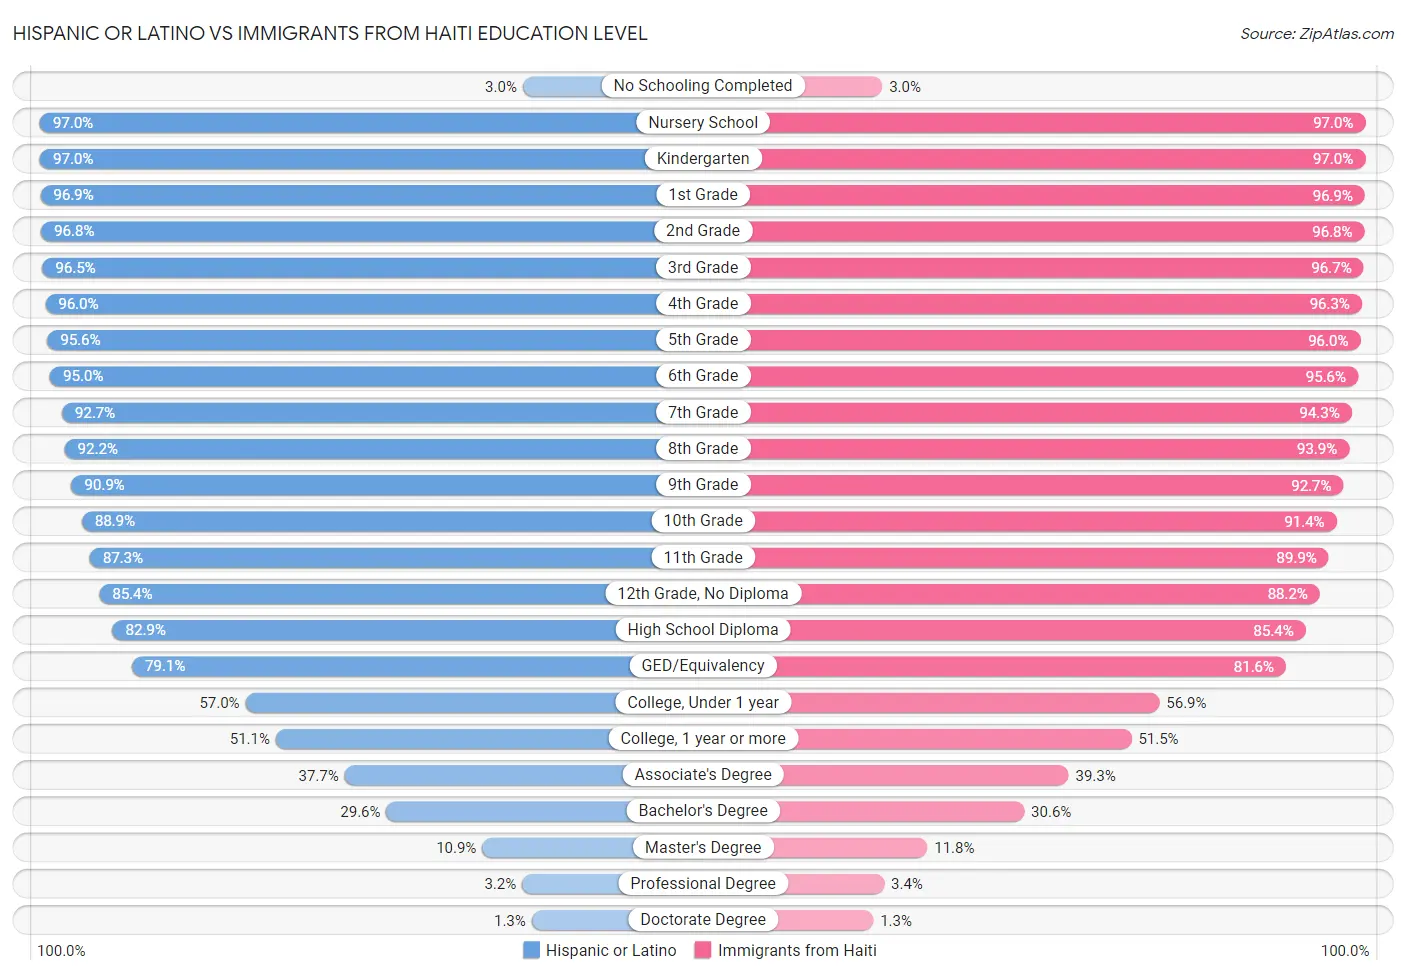 Hispanic or Latino vs Immigrants from Haiti Education Level